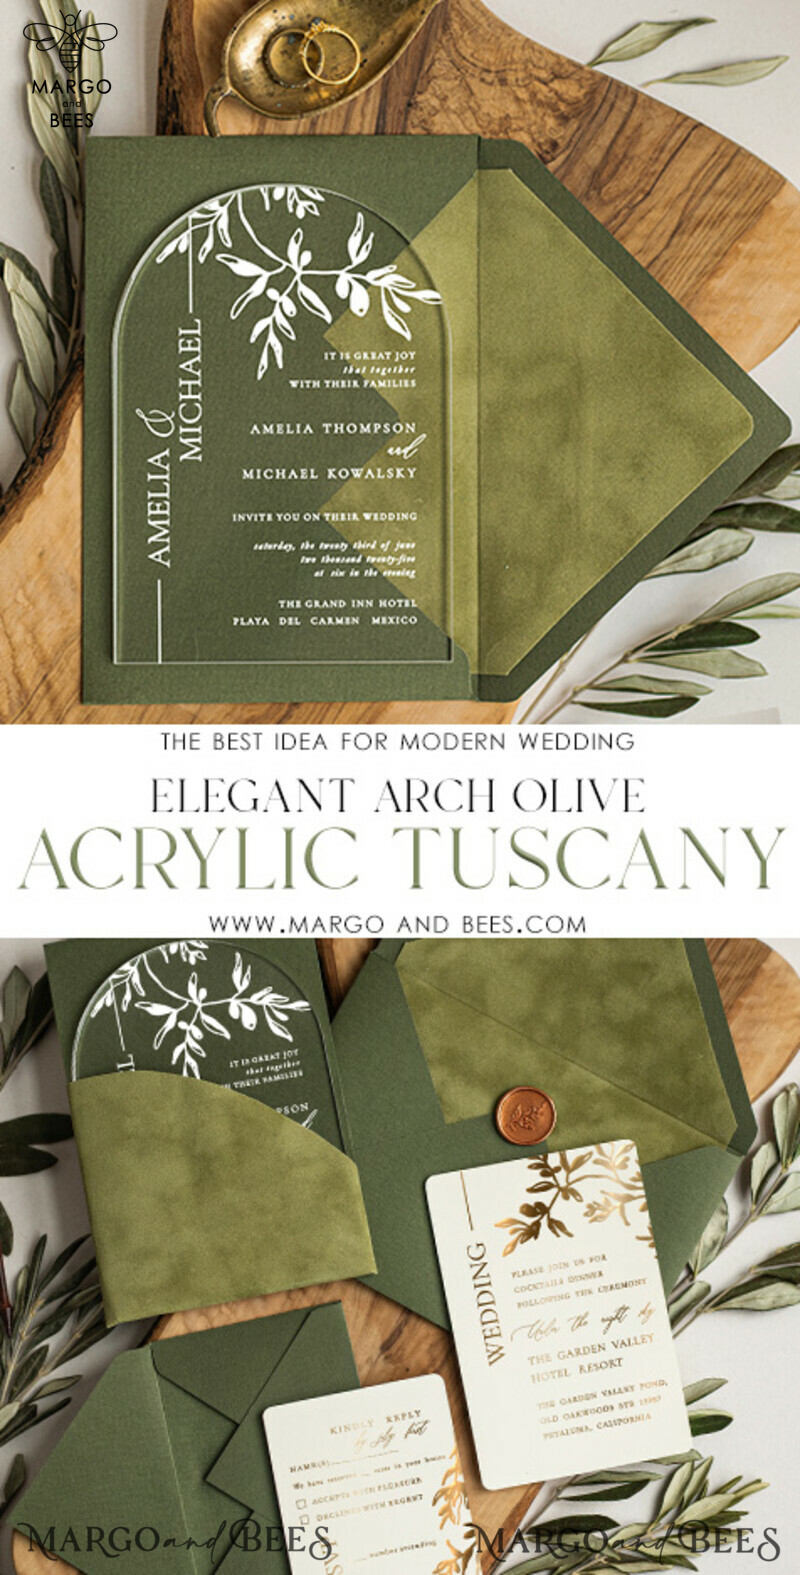 Arch Olive Wedding invitations cards, Luxury acrylic Tuscany Wedding Invitations, olive green Wedding Invitation Suite -3